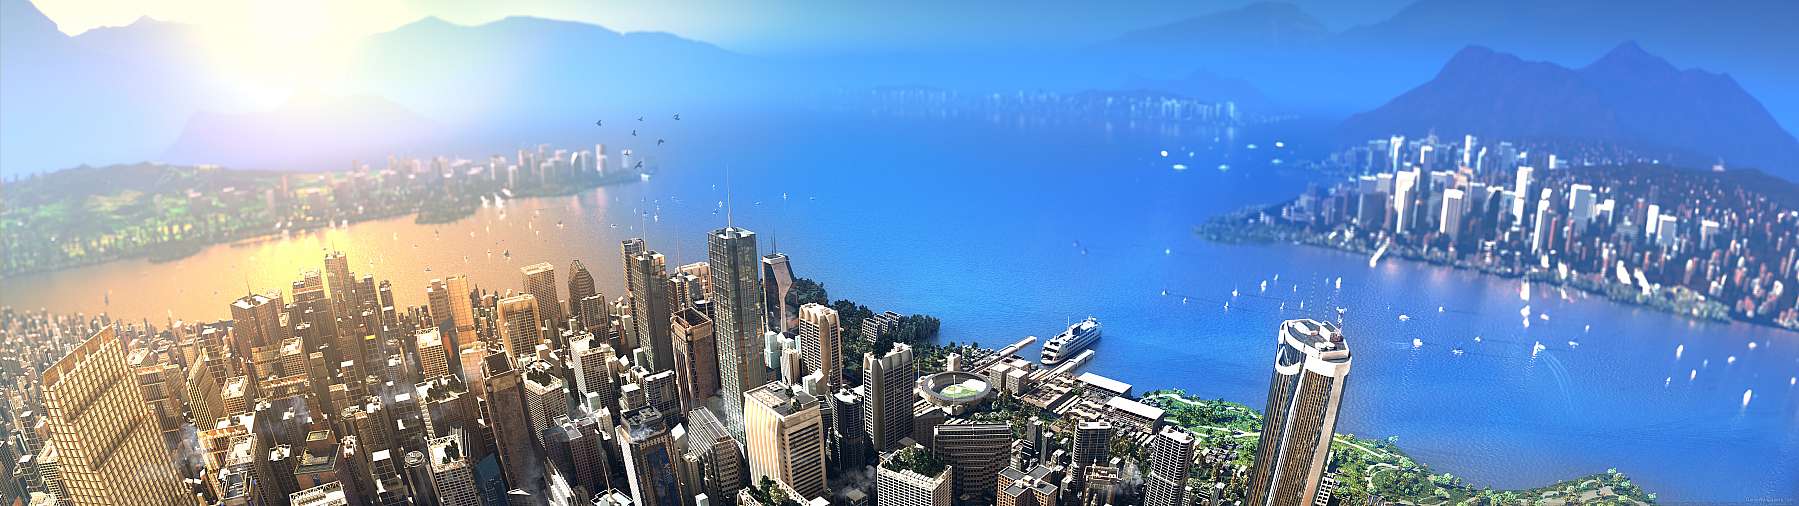 Cities Skylines 2 achtergrond